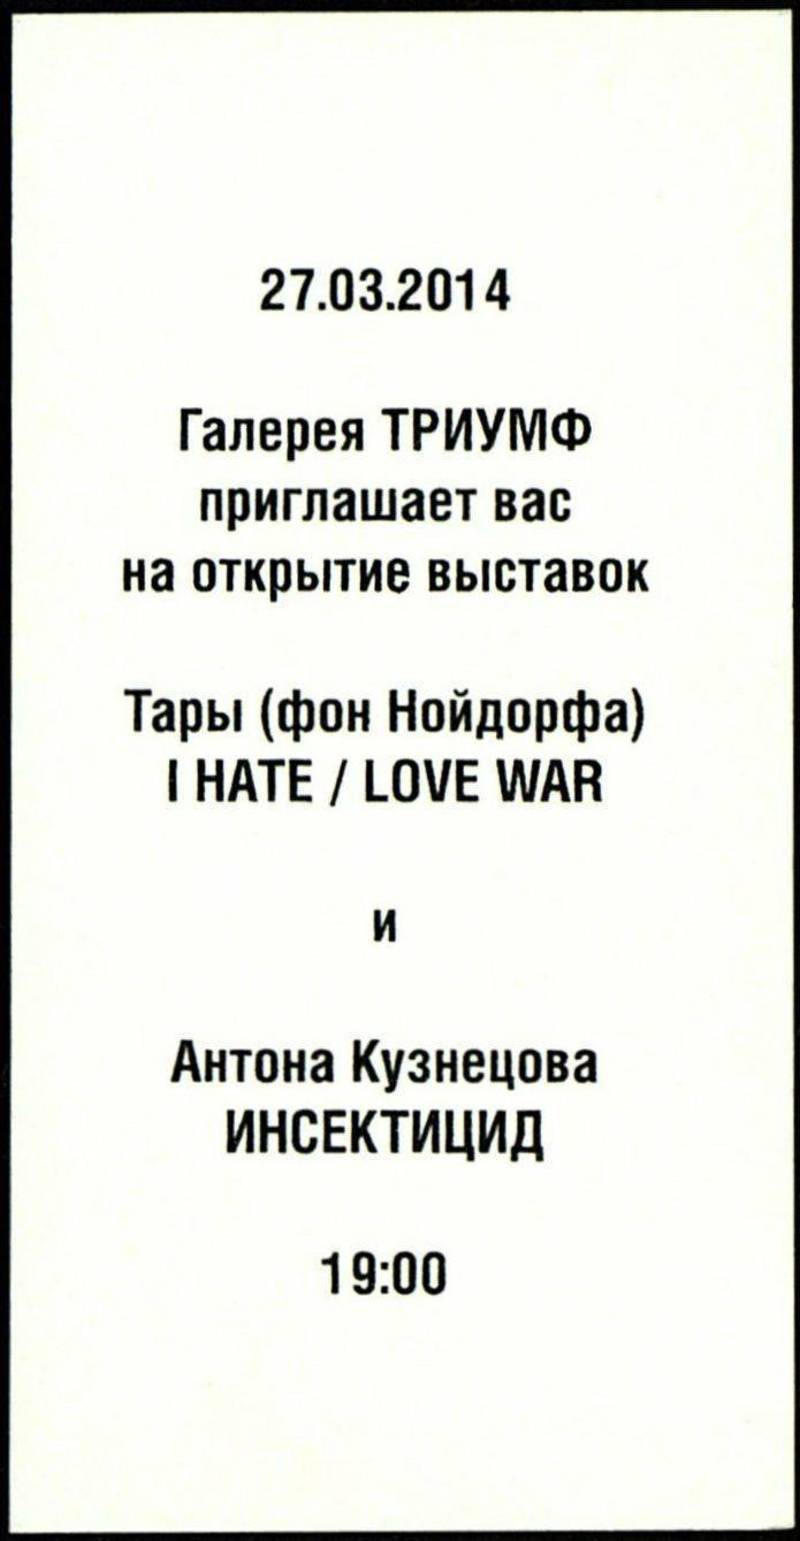 Tara von Neudorf. I hate / love war. Антон Кузнецов. Инсектицид